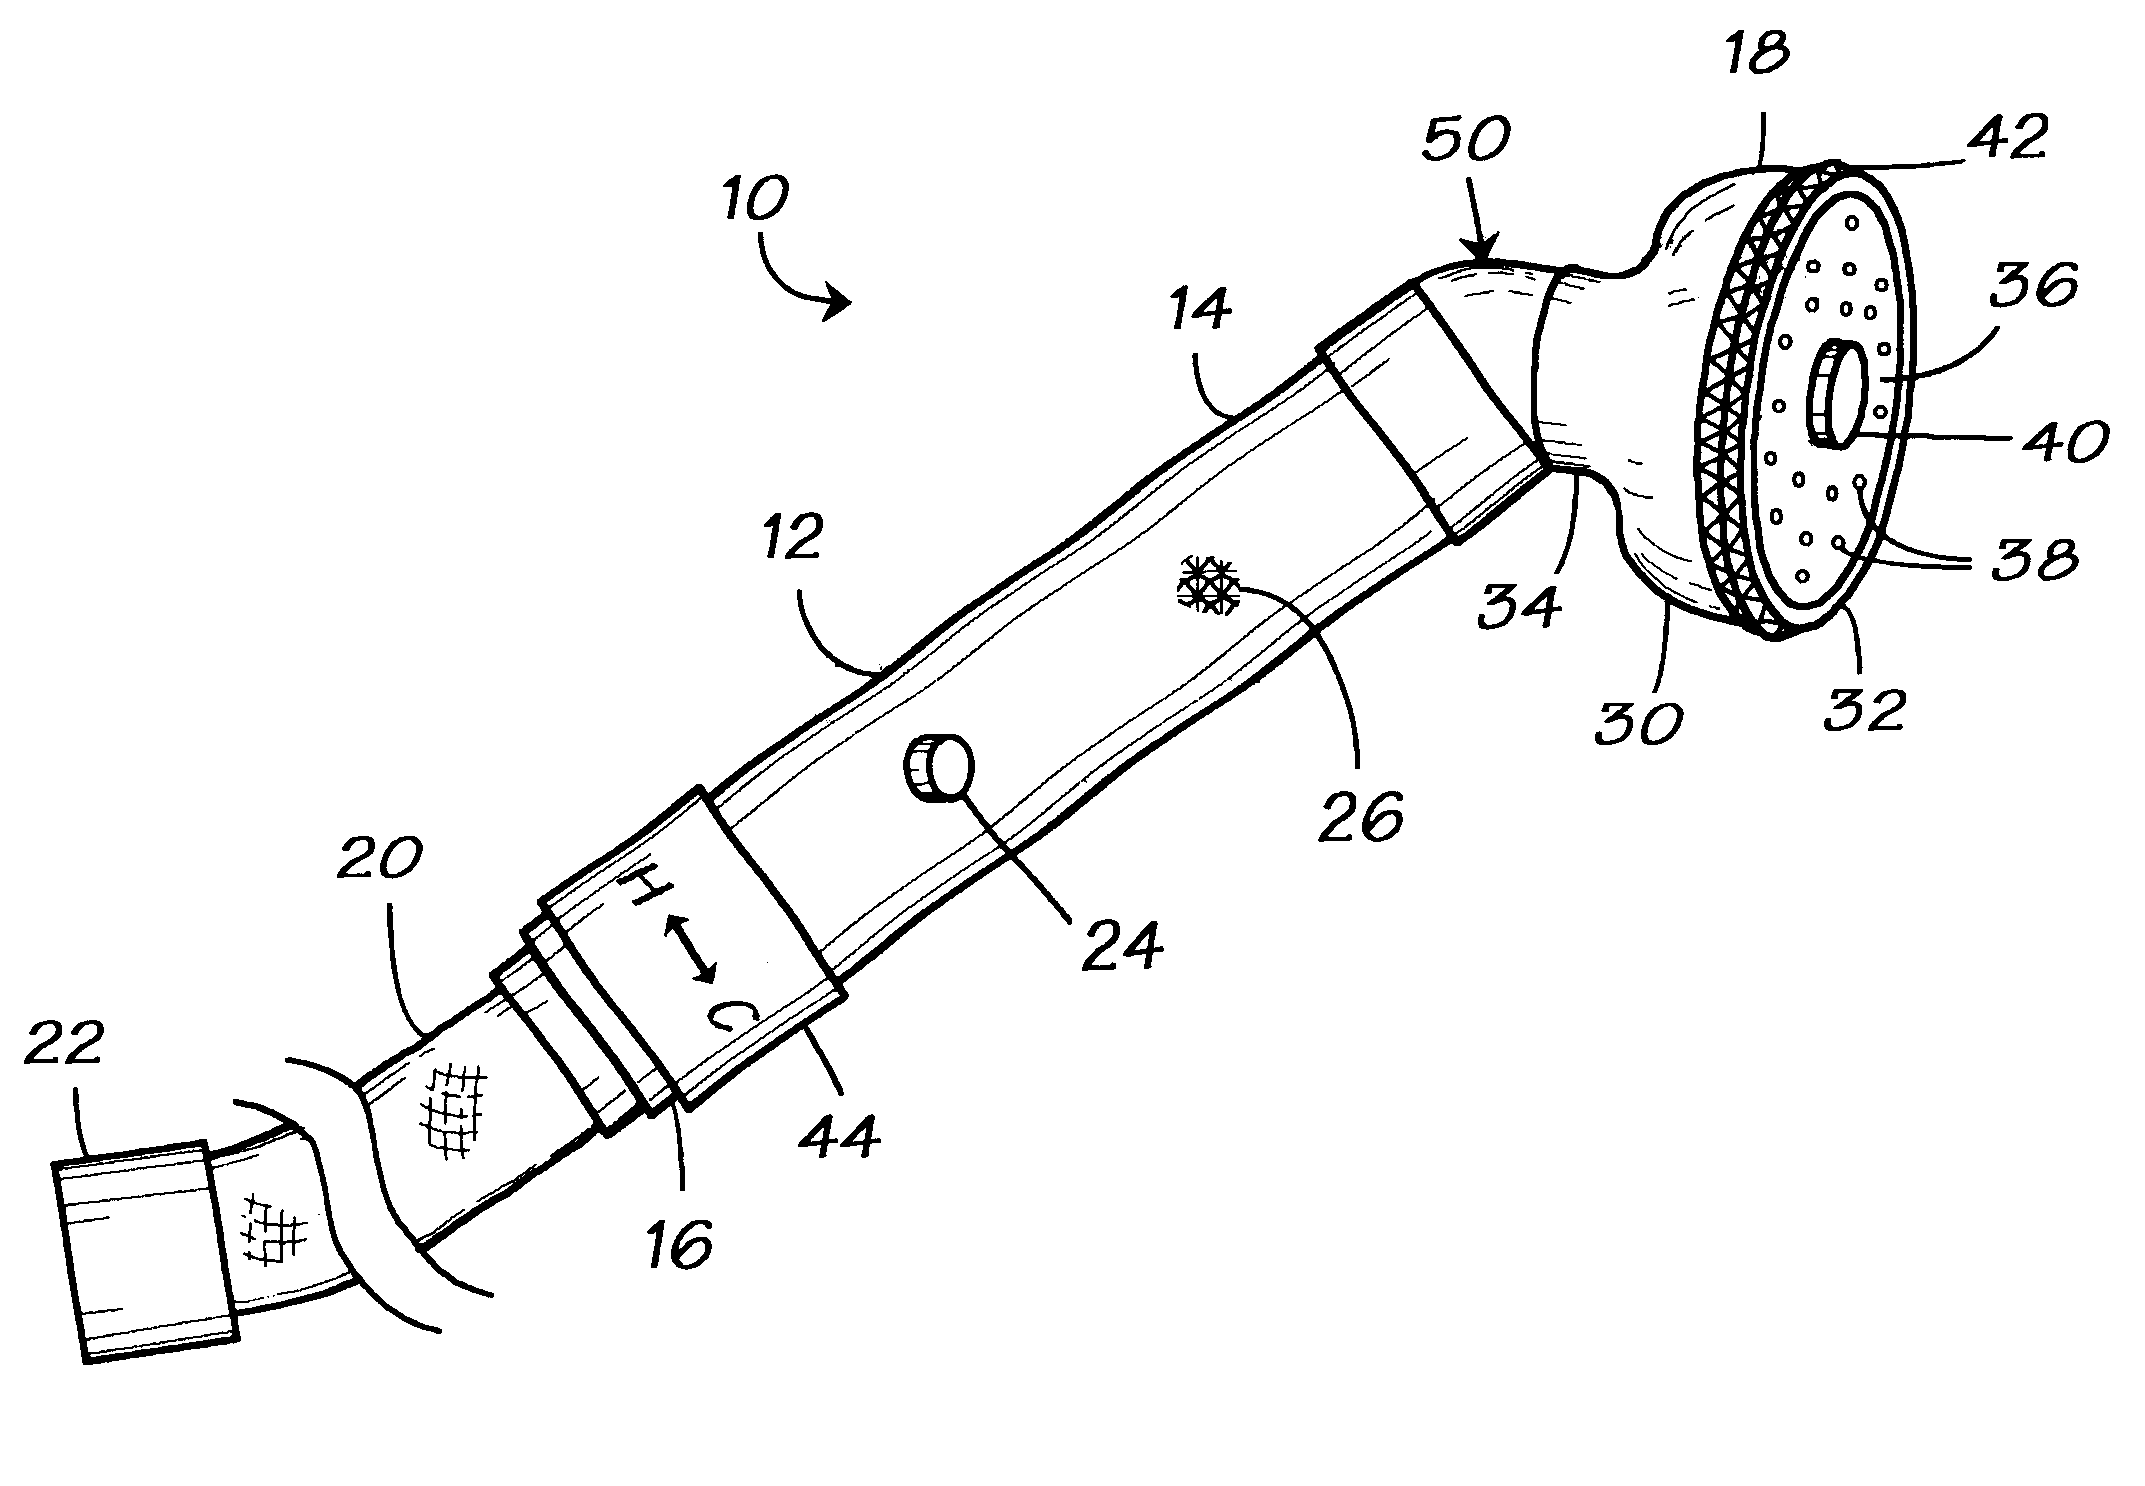 Adjustable hand-held shower apparatus